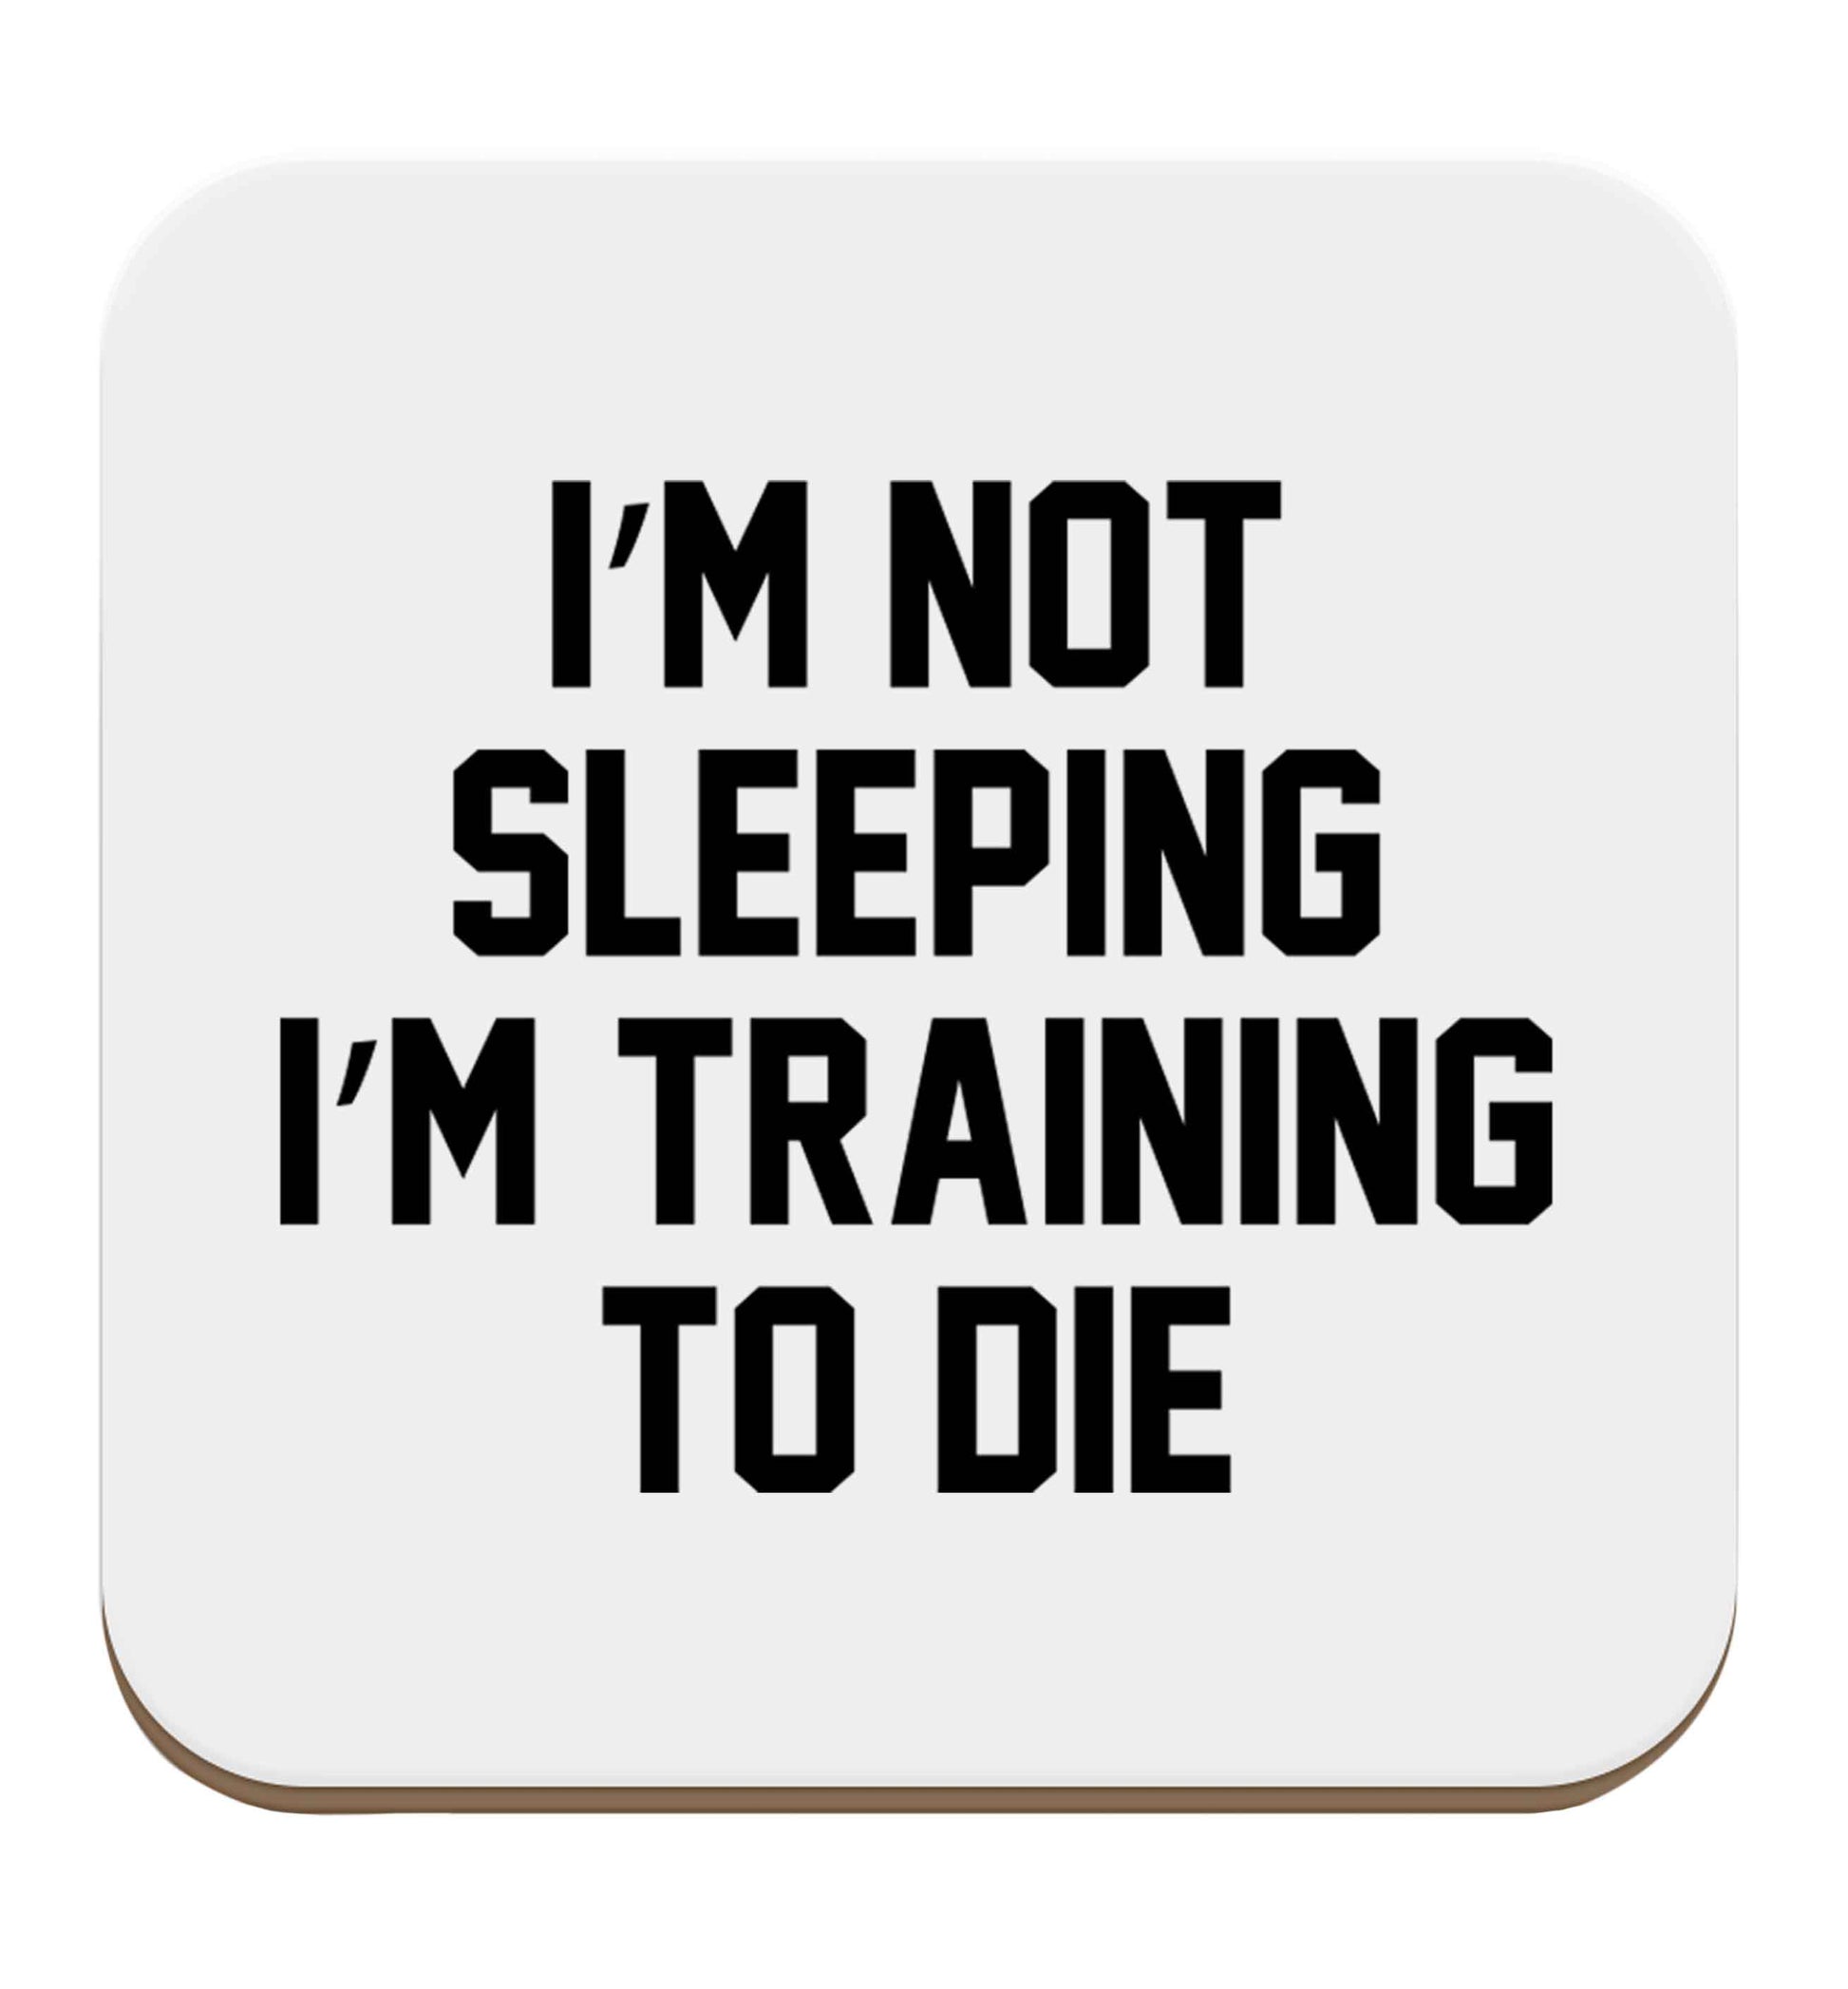 I'm not sleeping I'm training to die set of four coasters